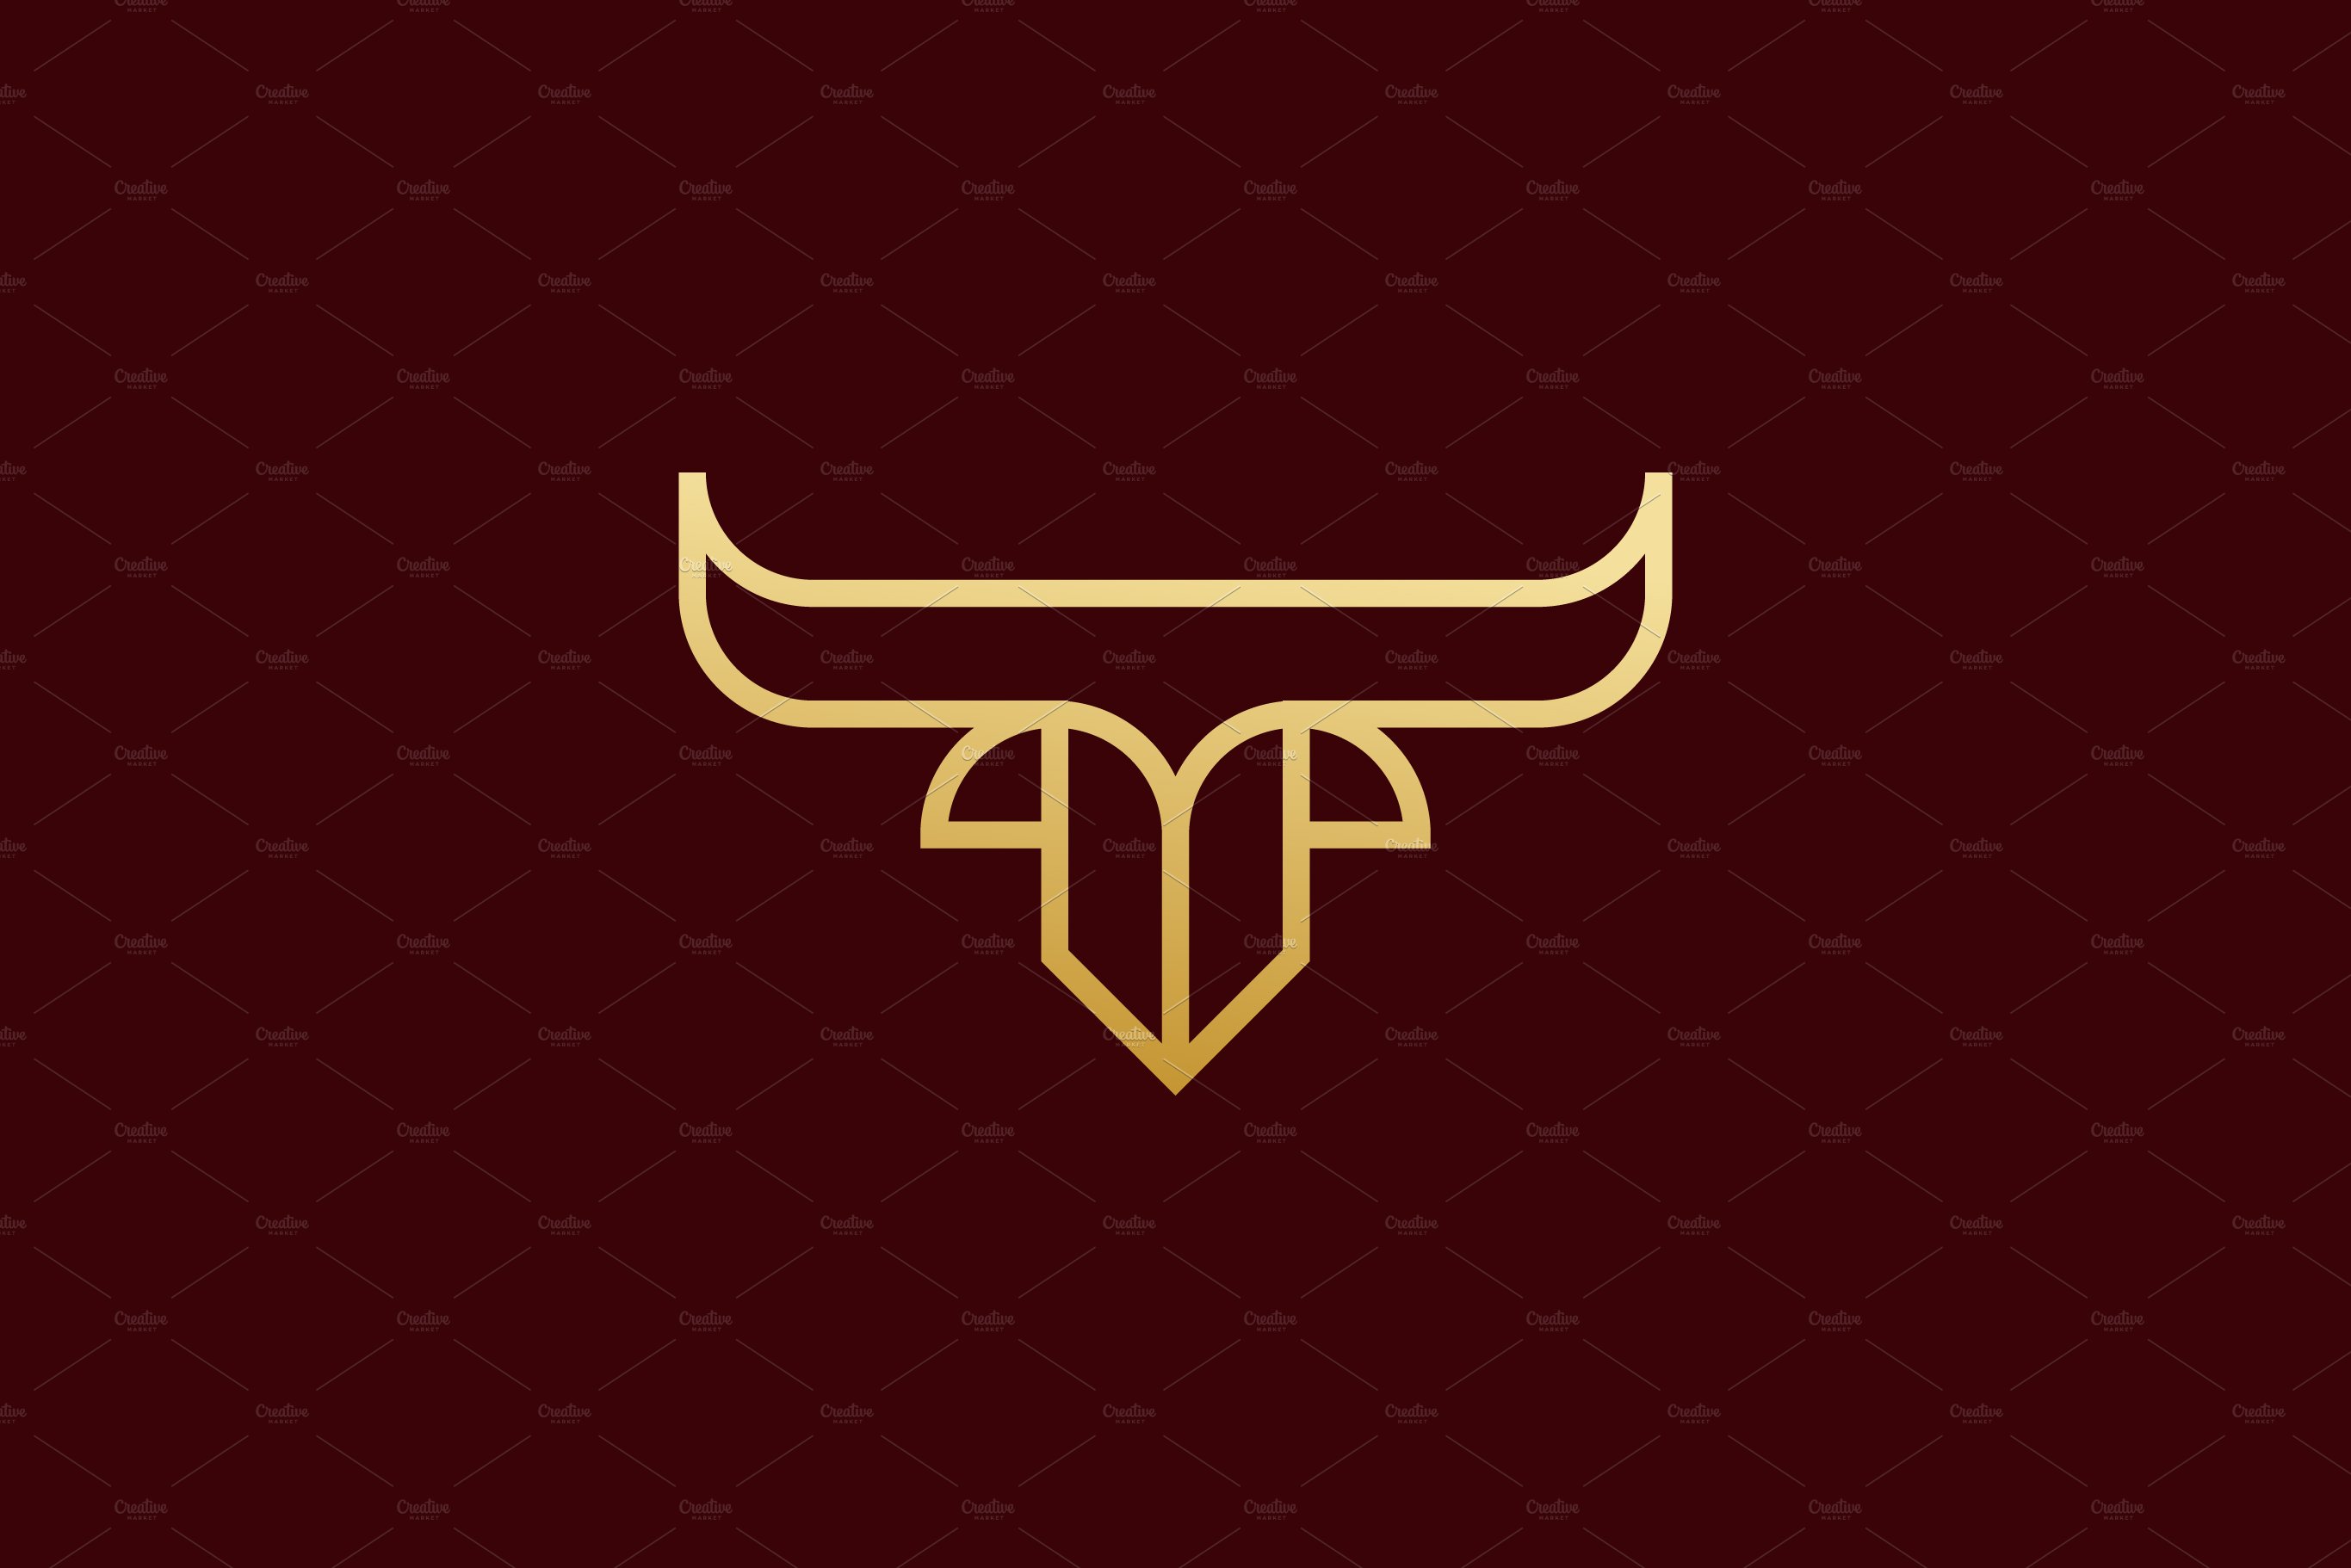 Royal Bull Logo cover image.